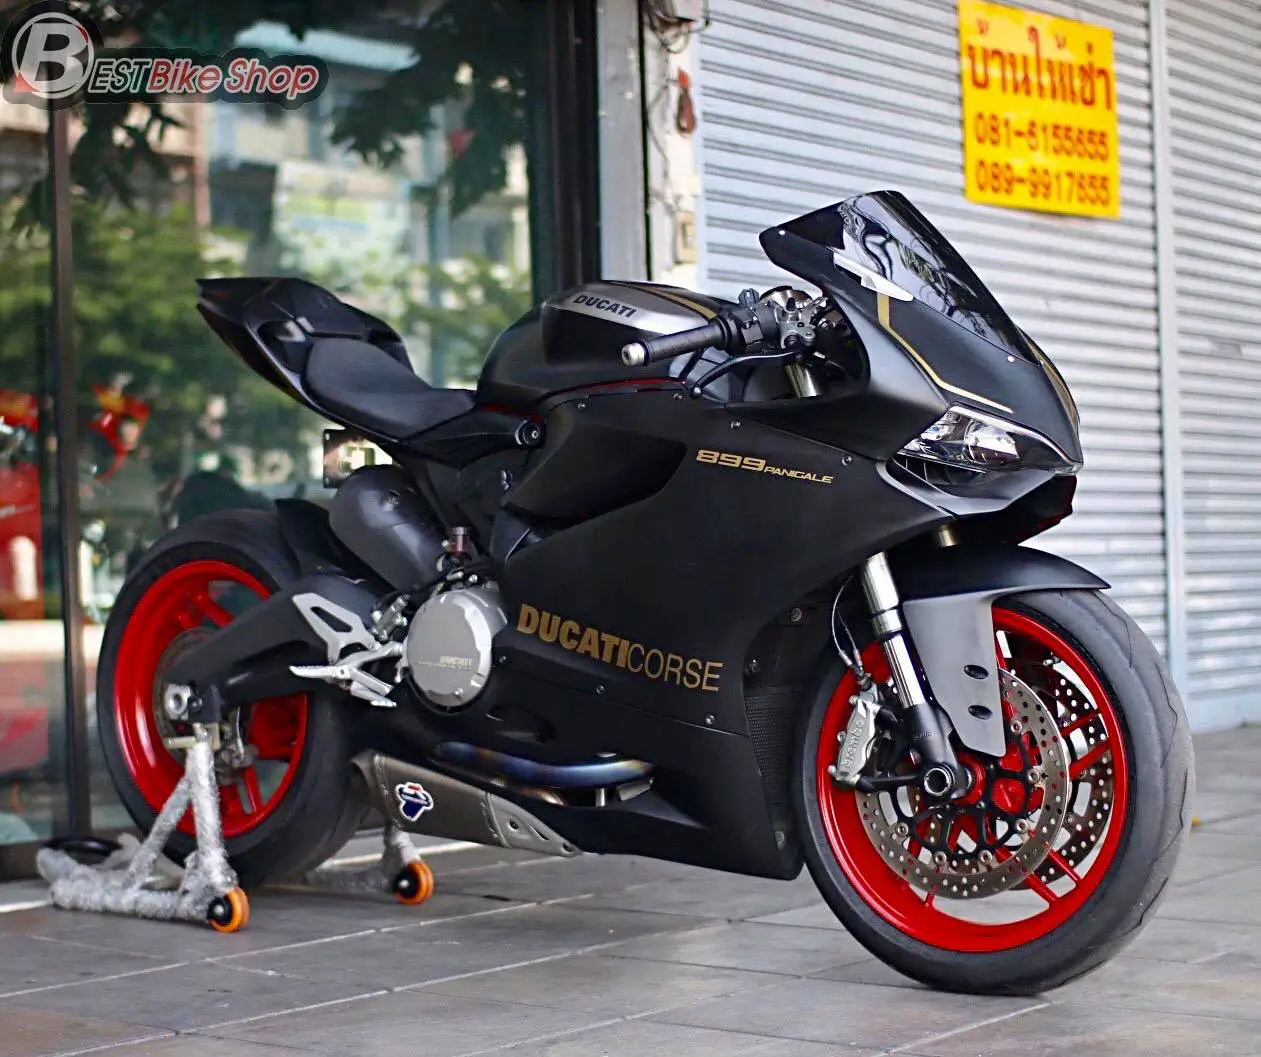 Ducati-899-PANIGALE-Black-2